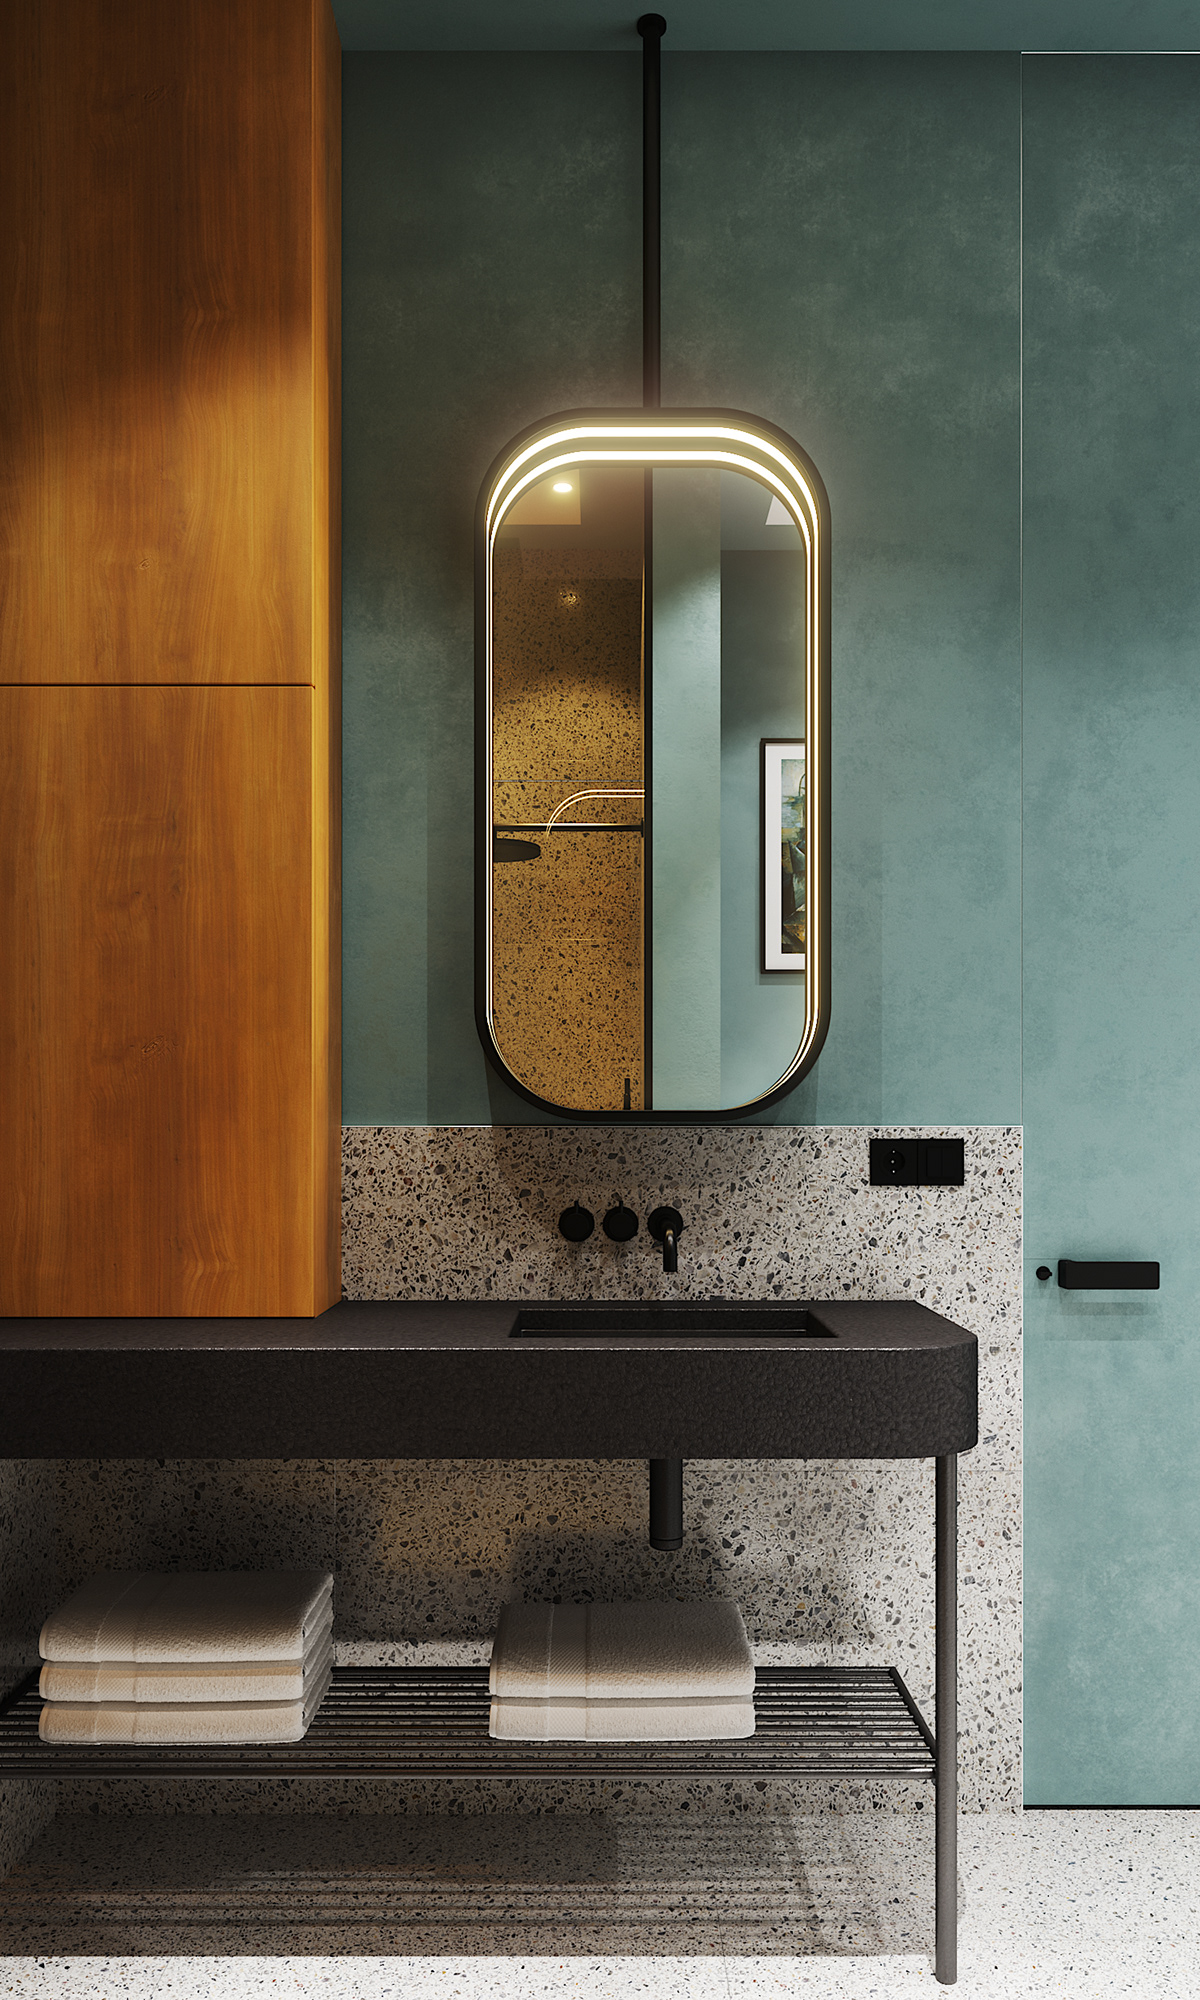 3ds max corona render  Render 3D Interior exterior bathroom visualization